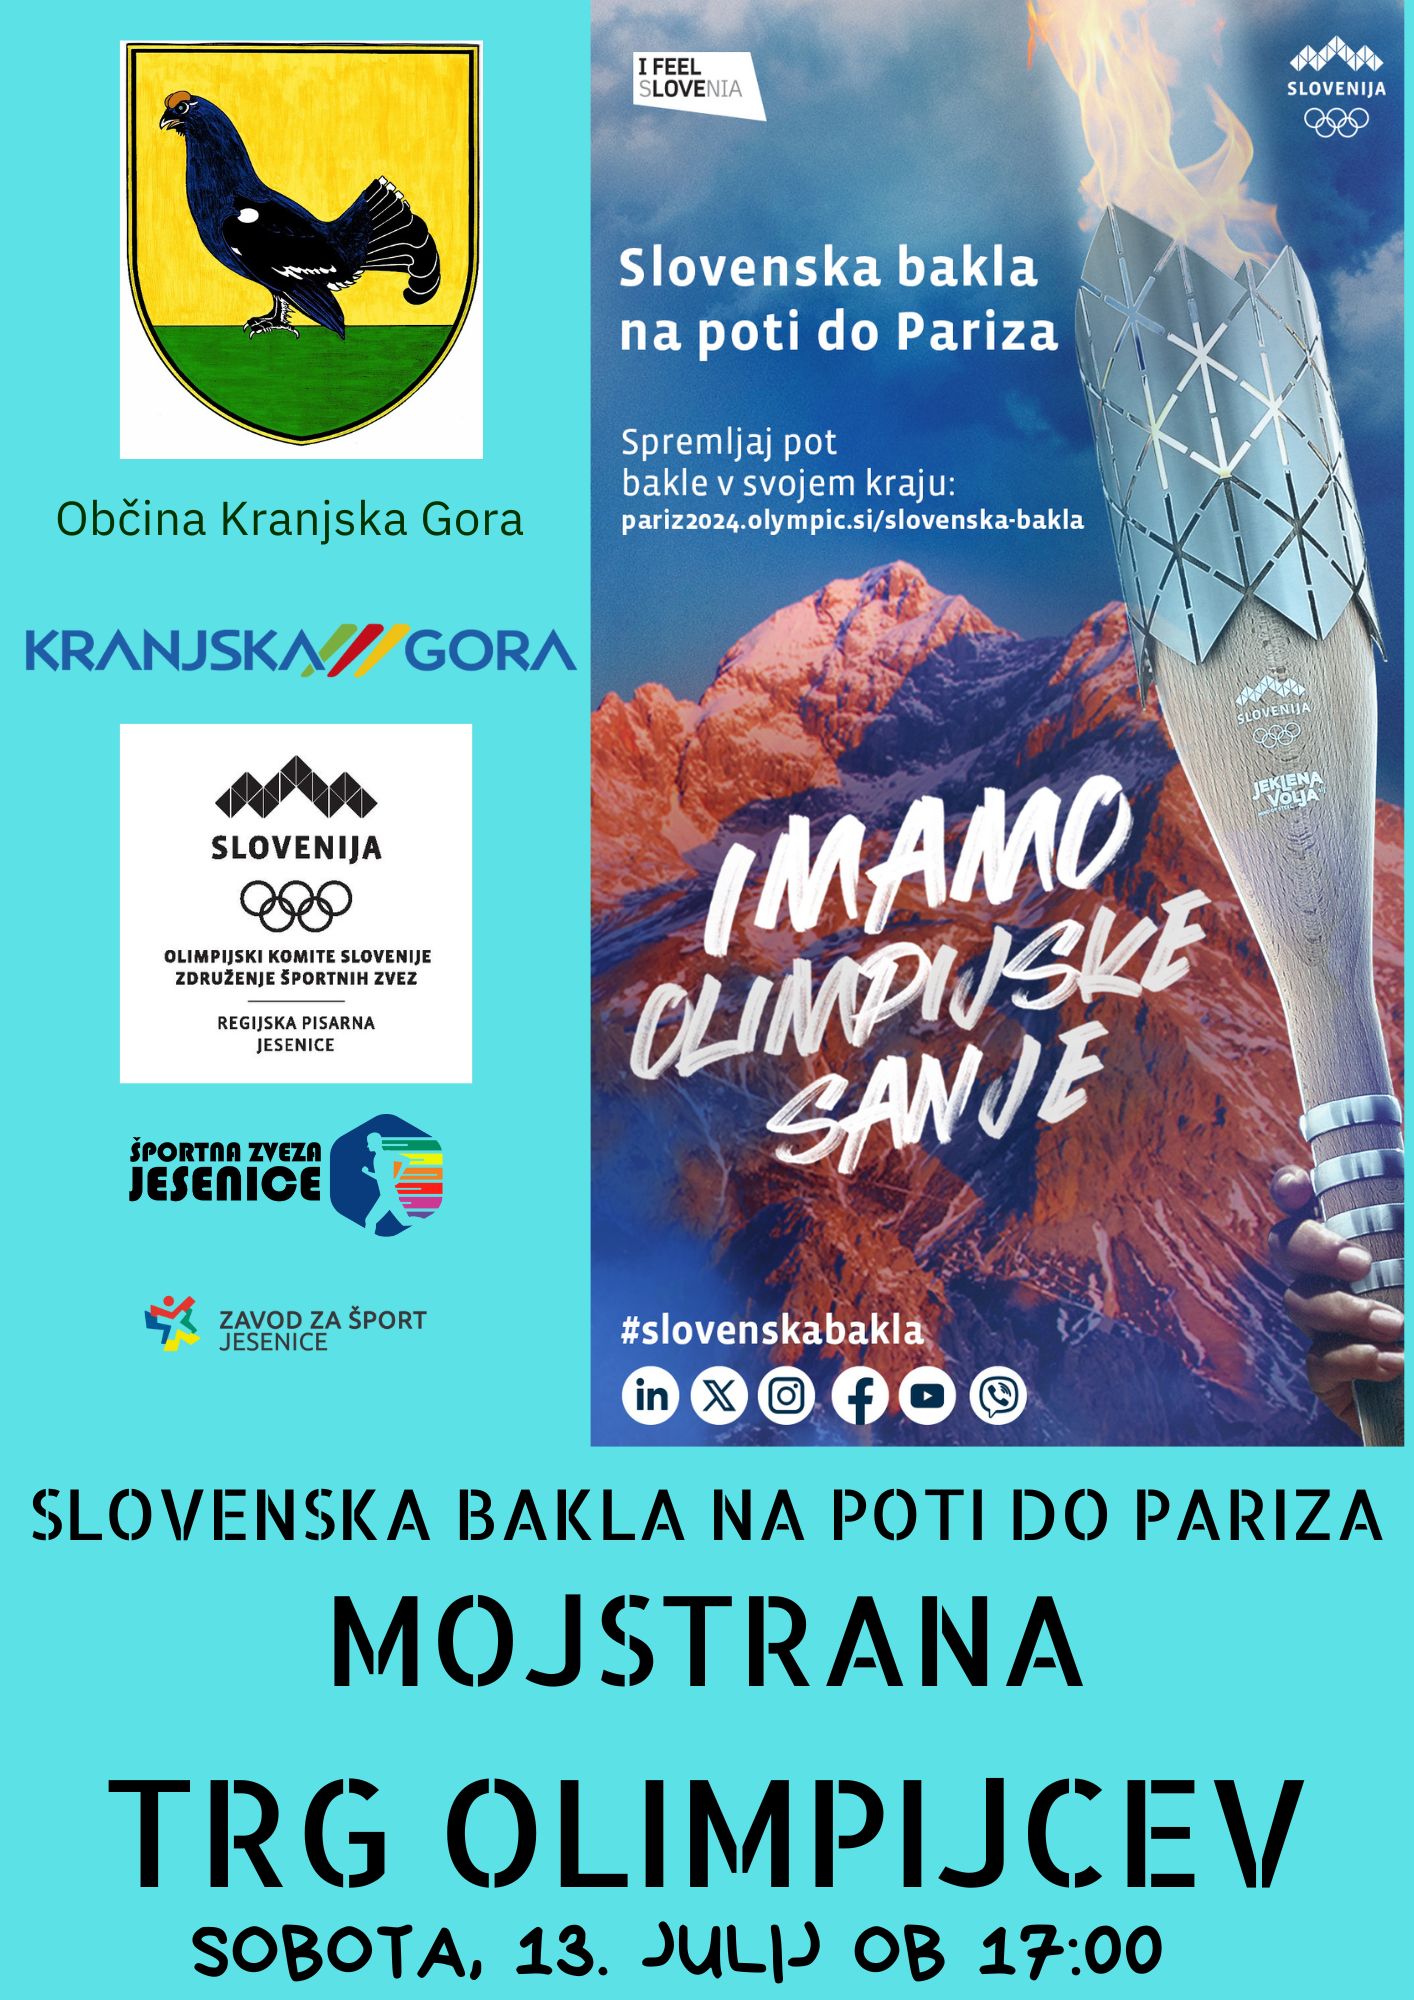 Slovenska bakla Mojstrana (3)